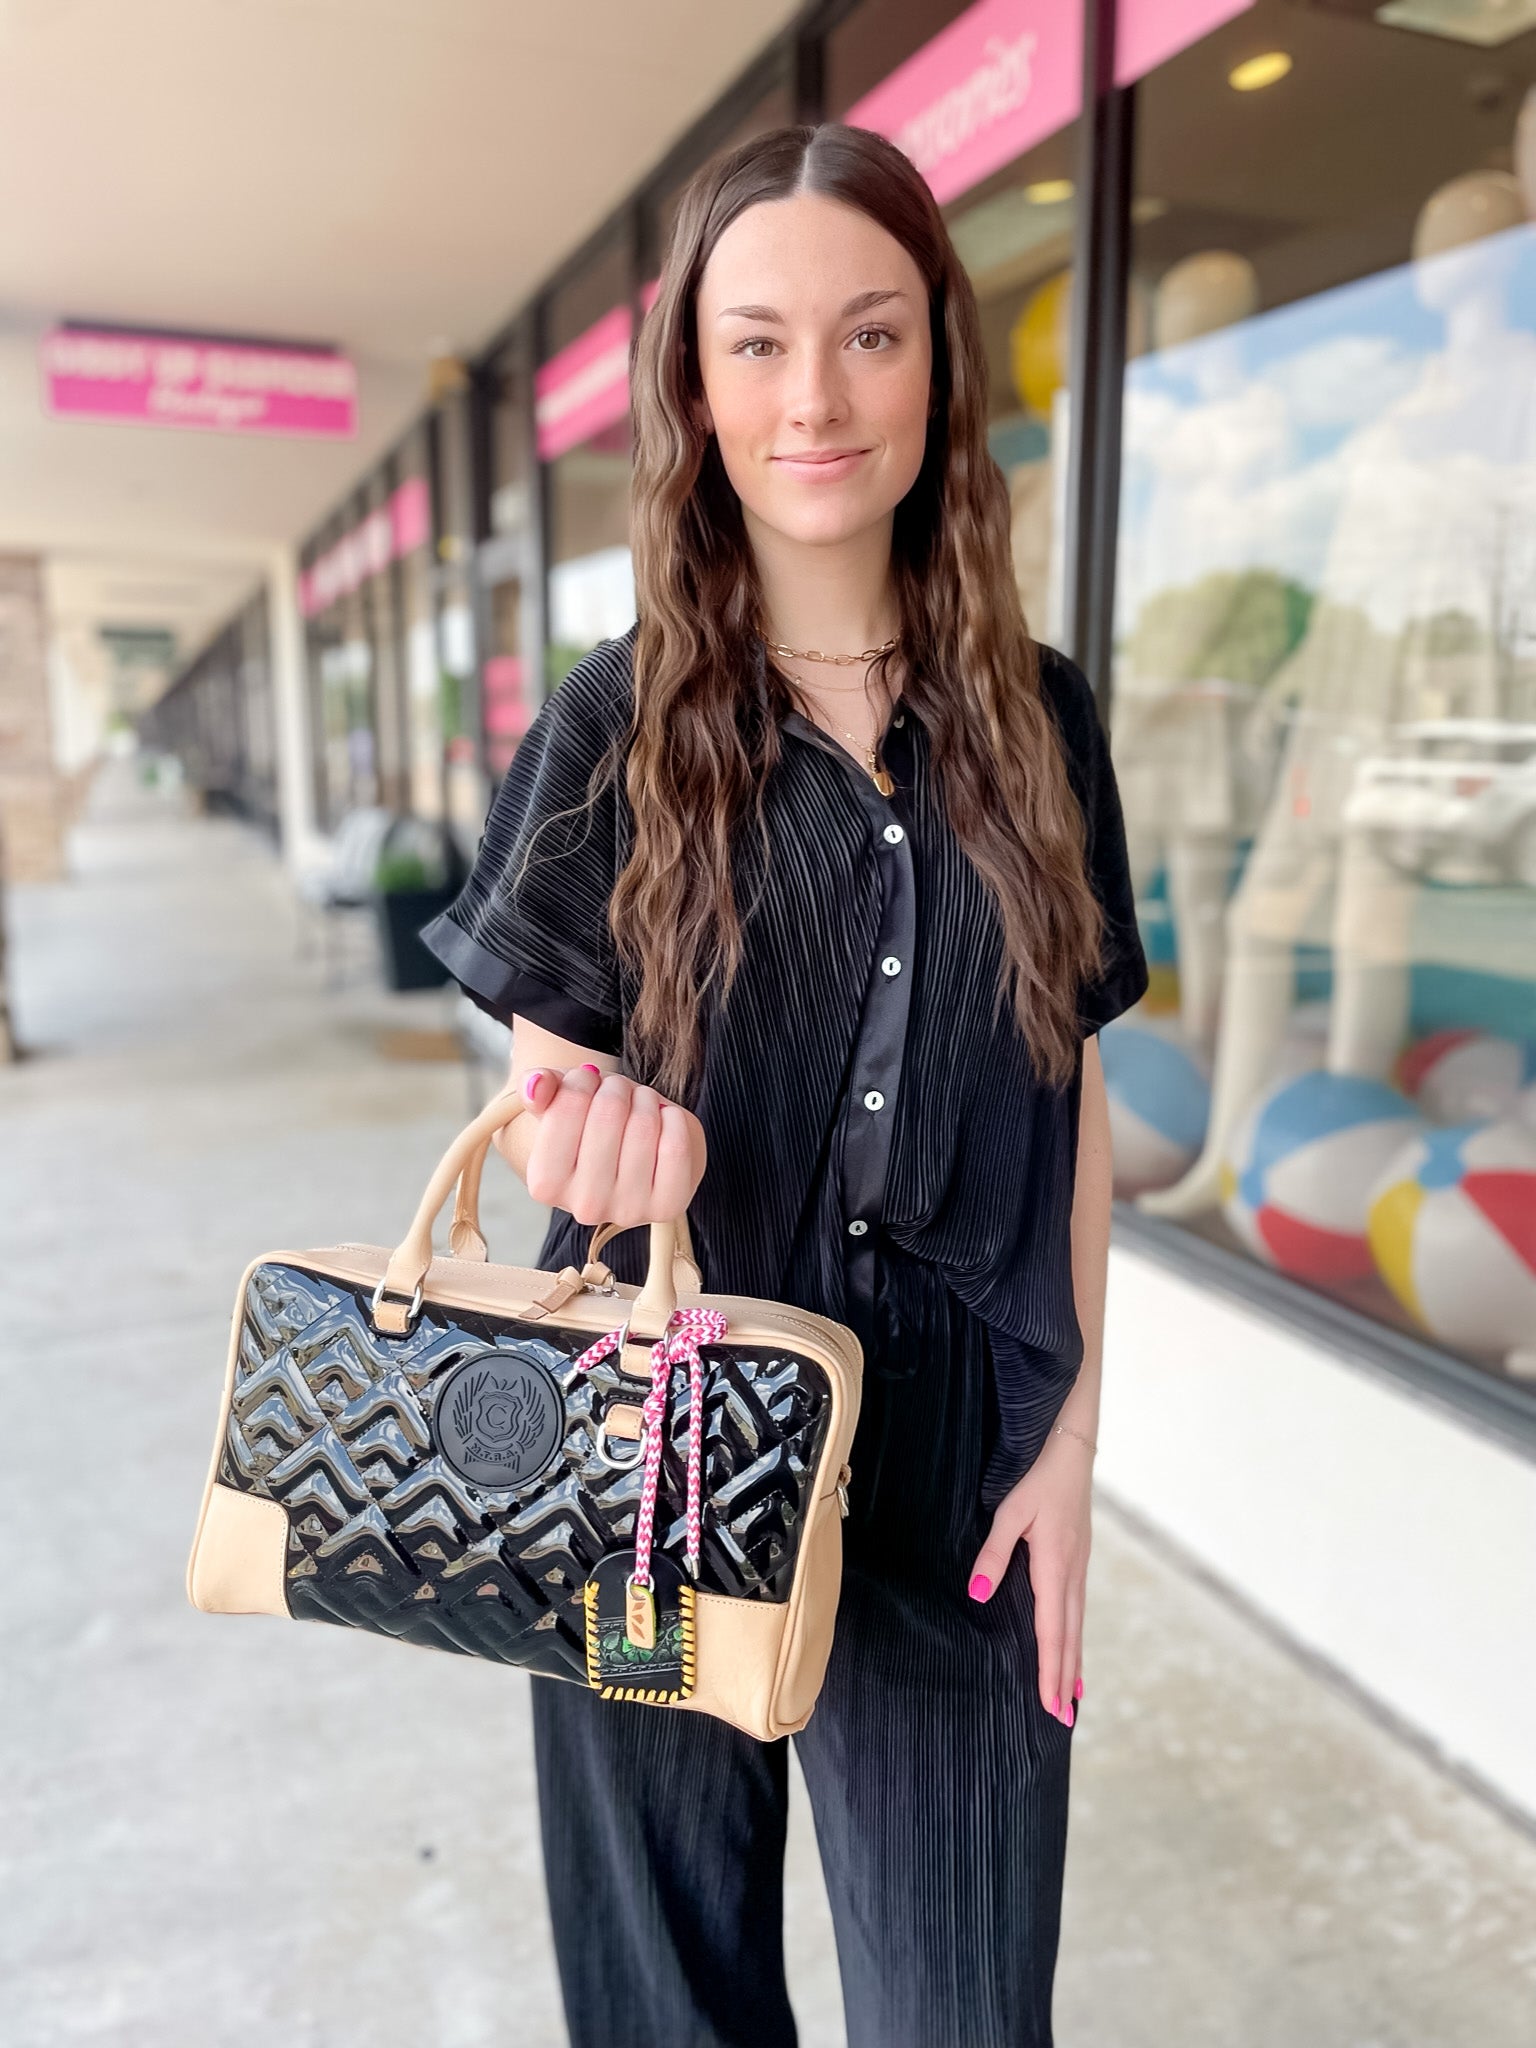 Consuela | Inked Satchel Bag - Giddy Up Glamour Boutique